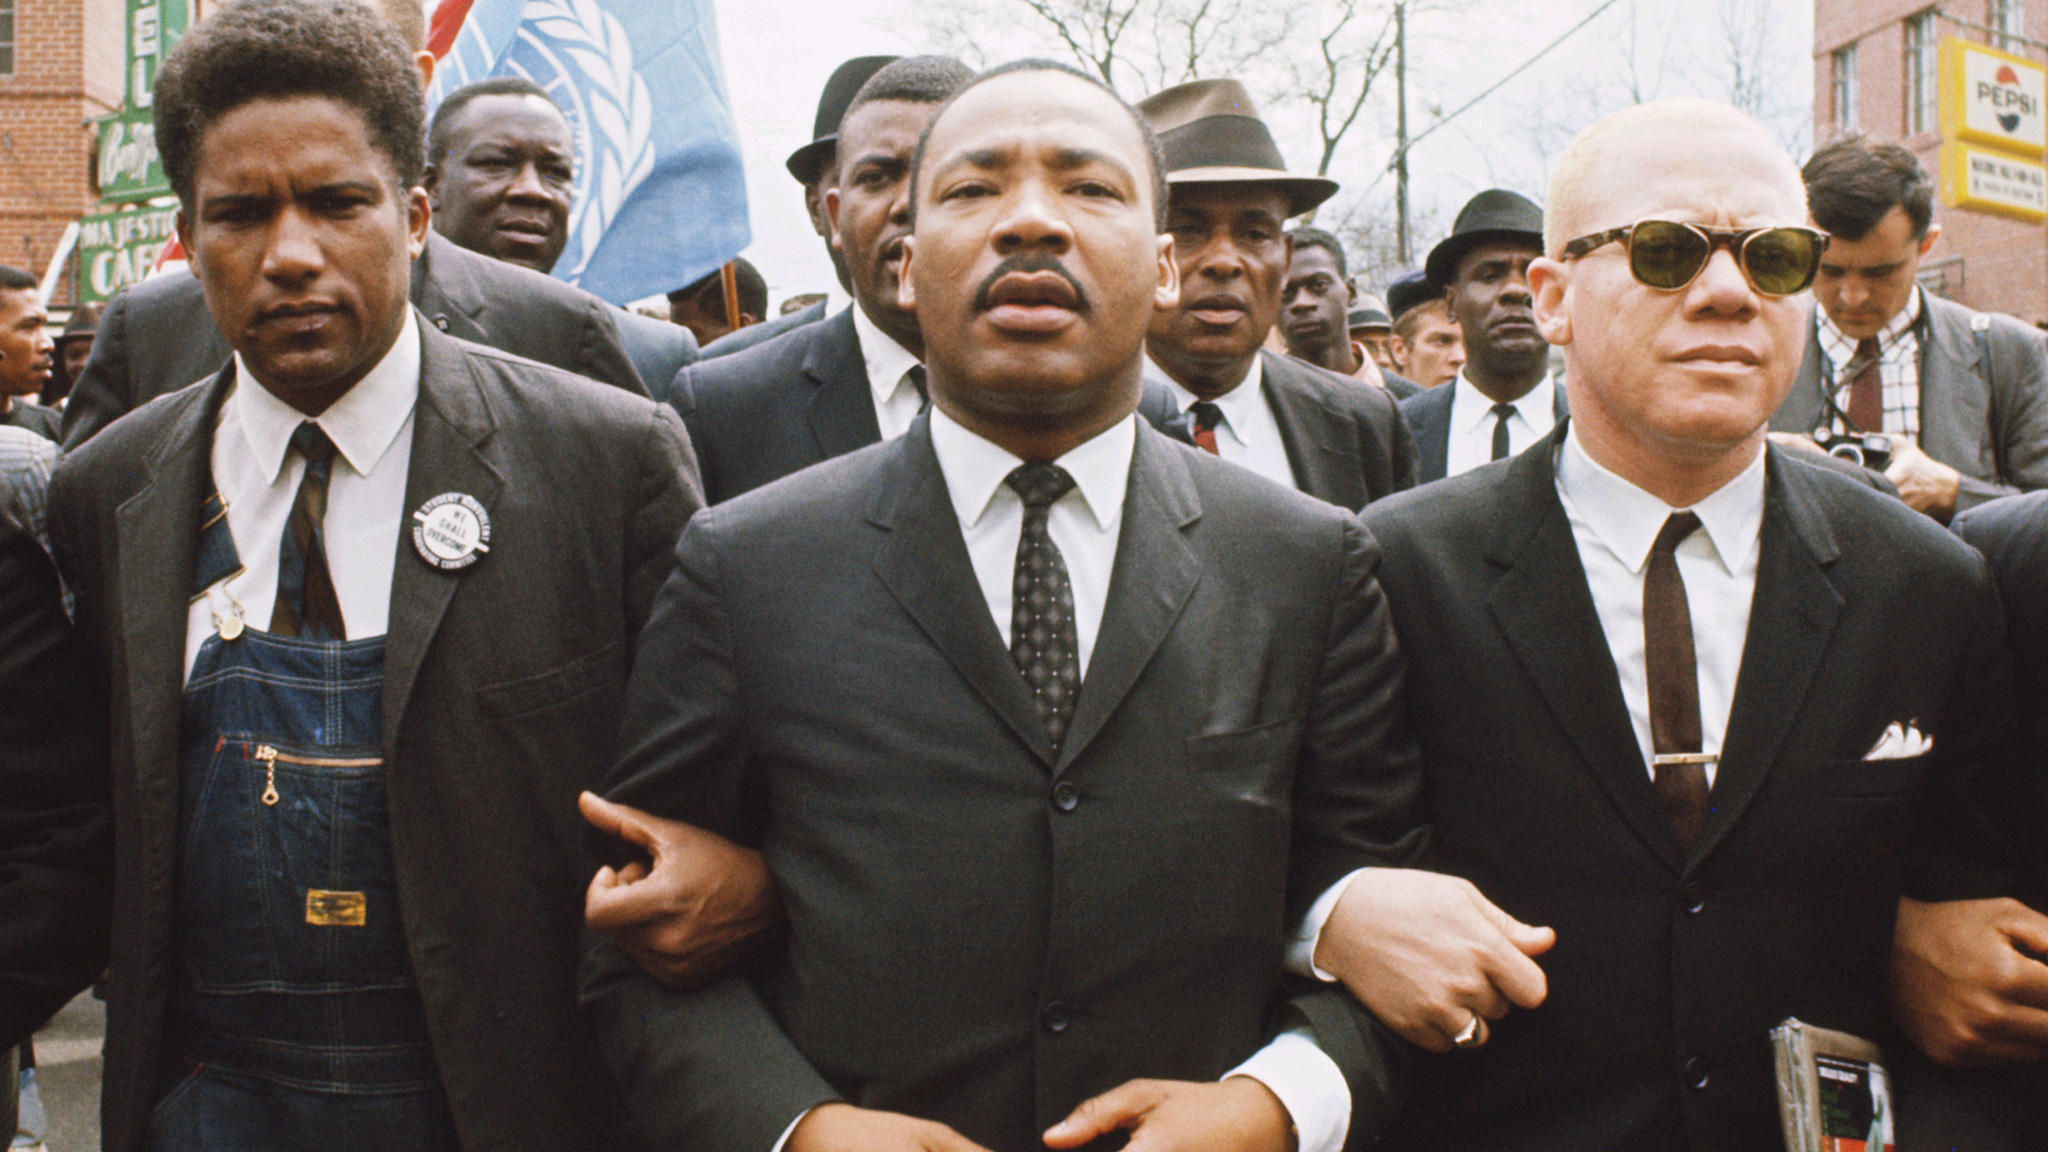 Martin Luther King Jr Wallpaper - Elijah Cummings Selma March , HD Wallpaper & Backgrounds